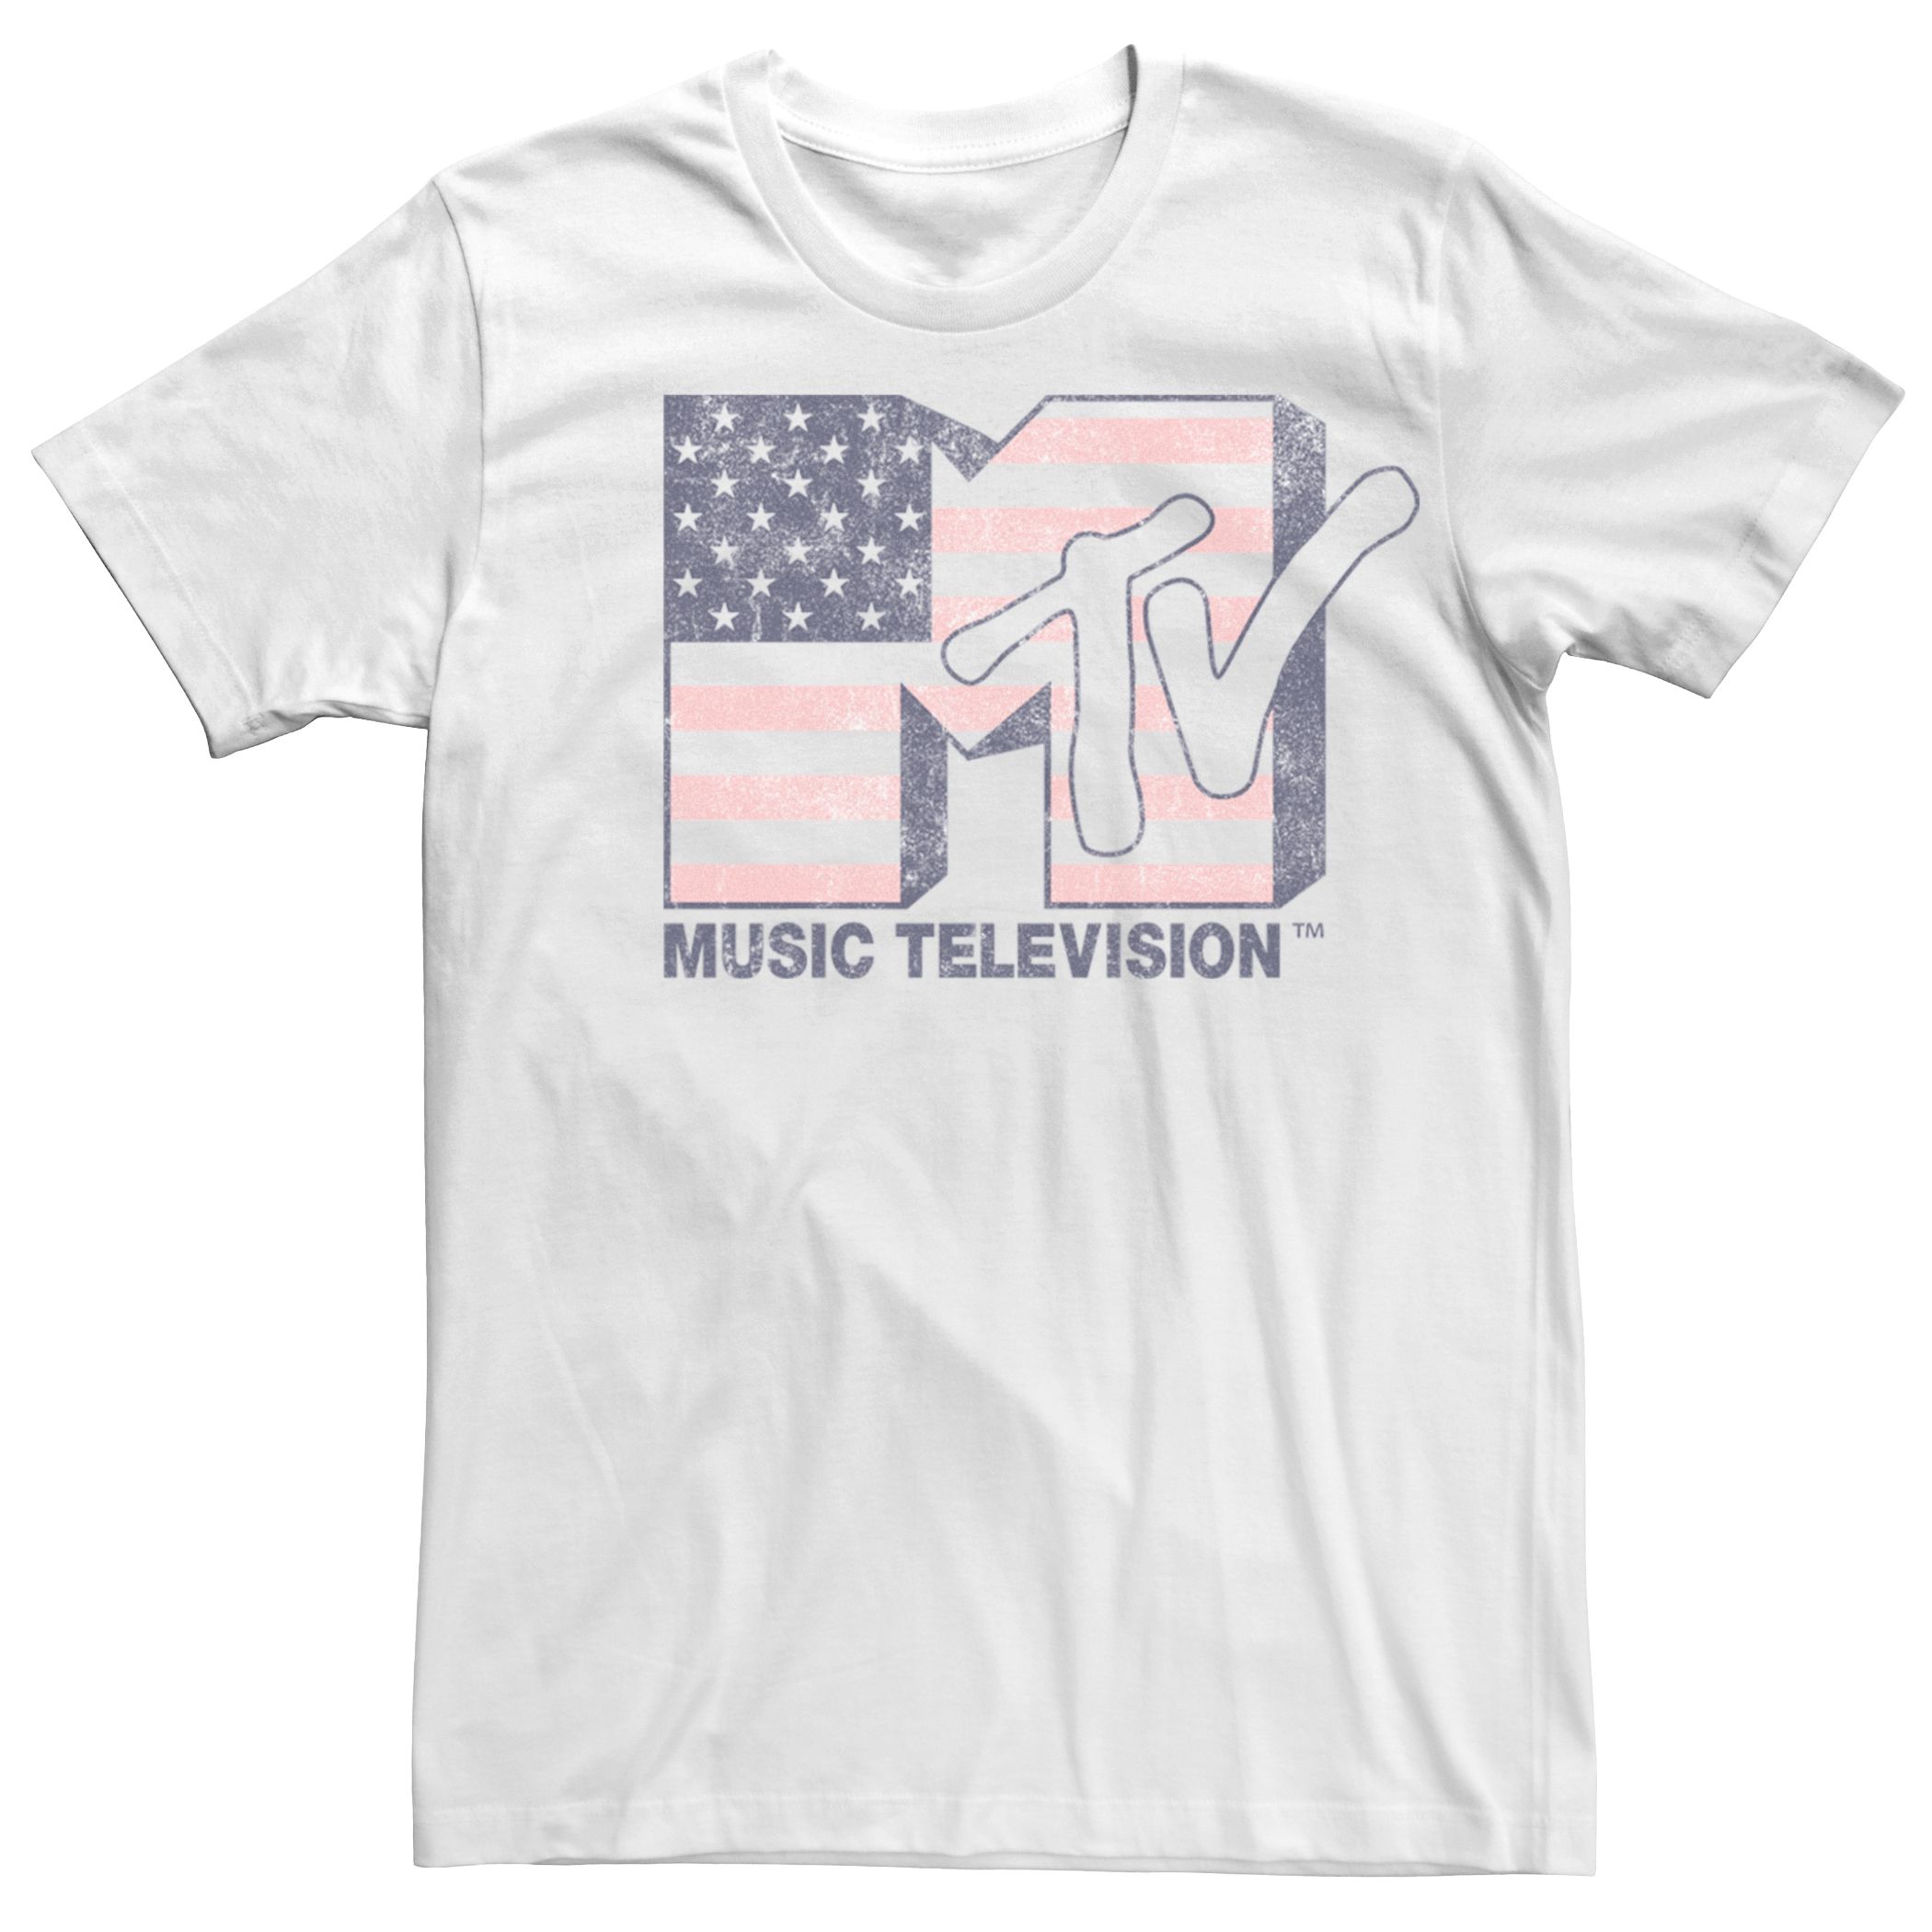 Мужская футболка с логотипом MTV и рваным американским флагом Licensed Character